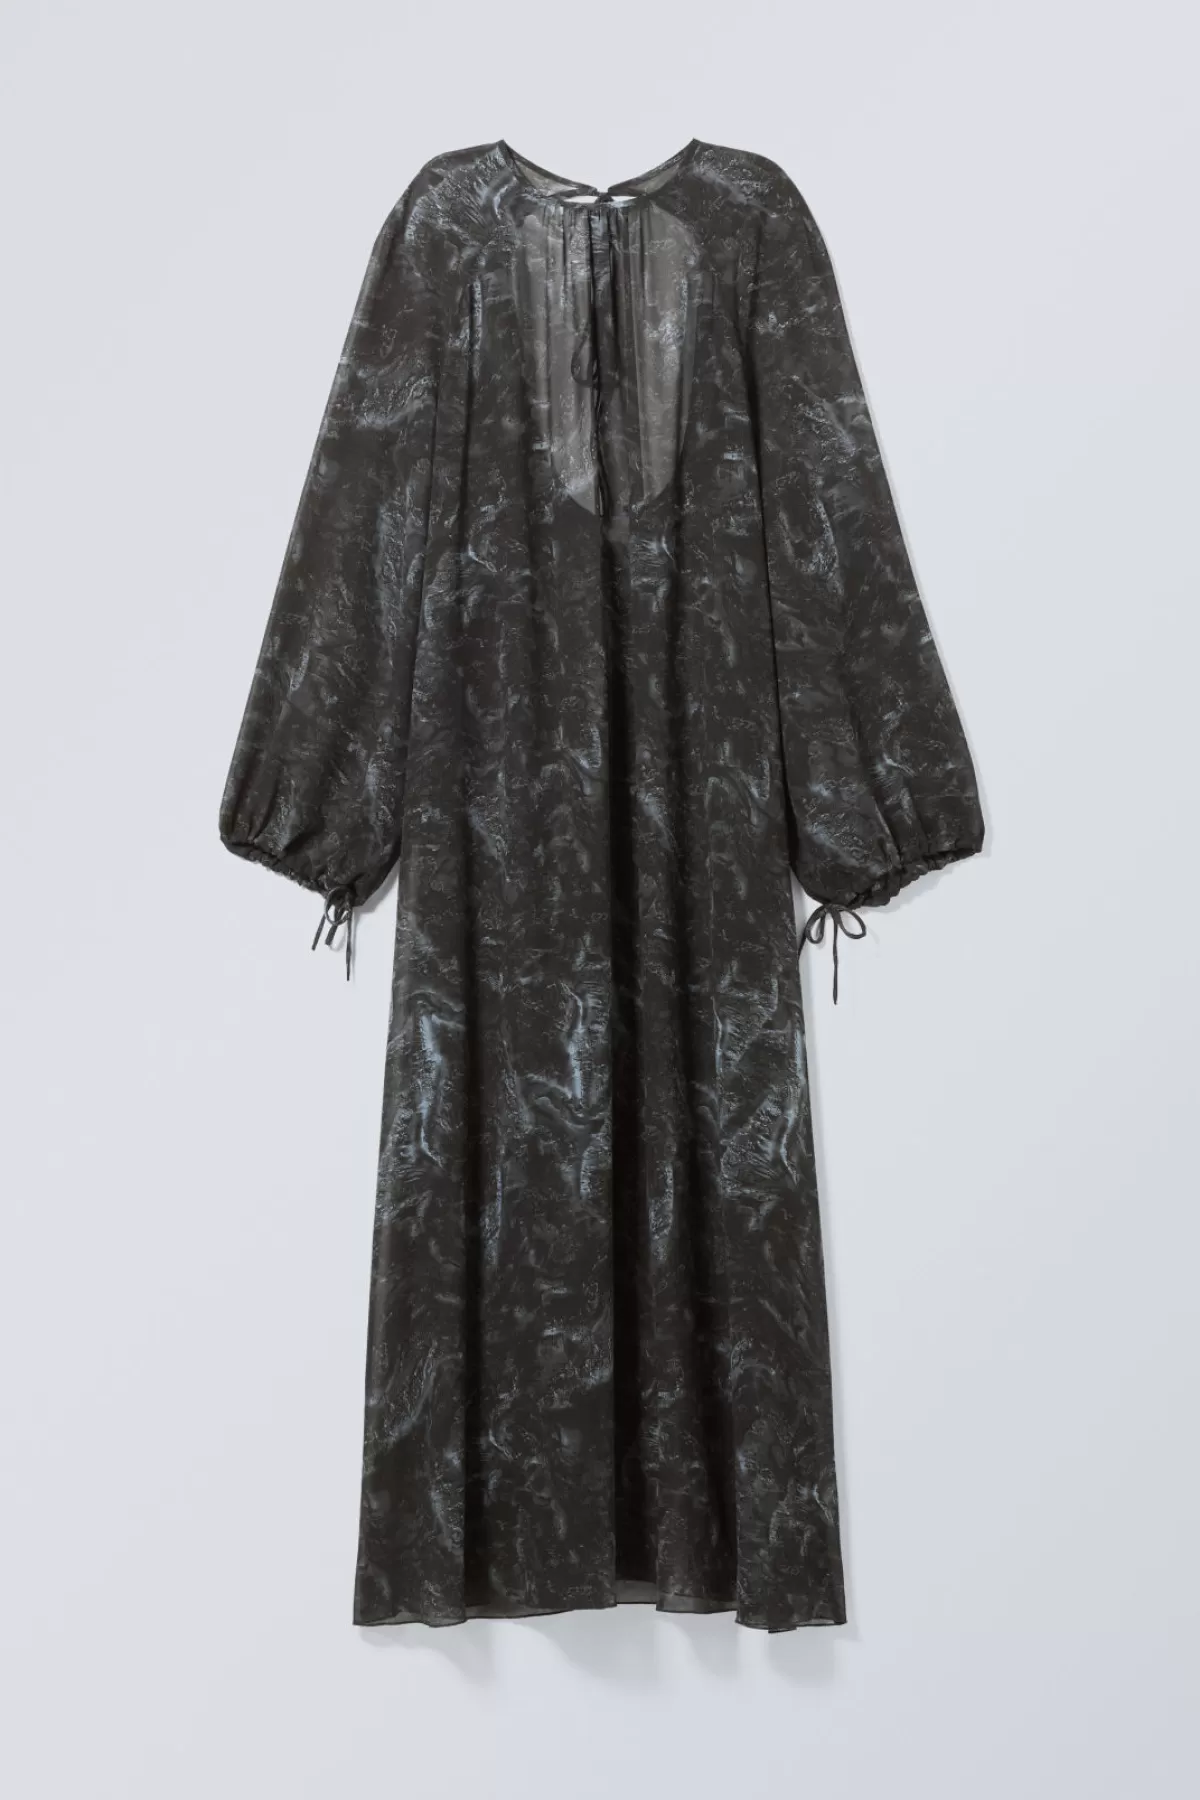 Weekday Maeve Oversized Dress Black Printed Lace Flash Sale